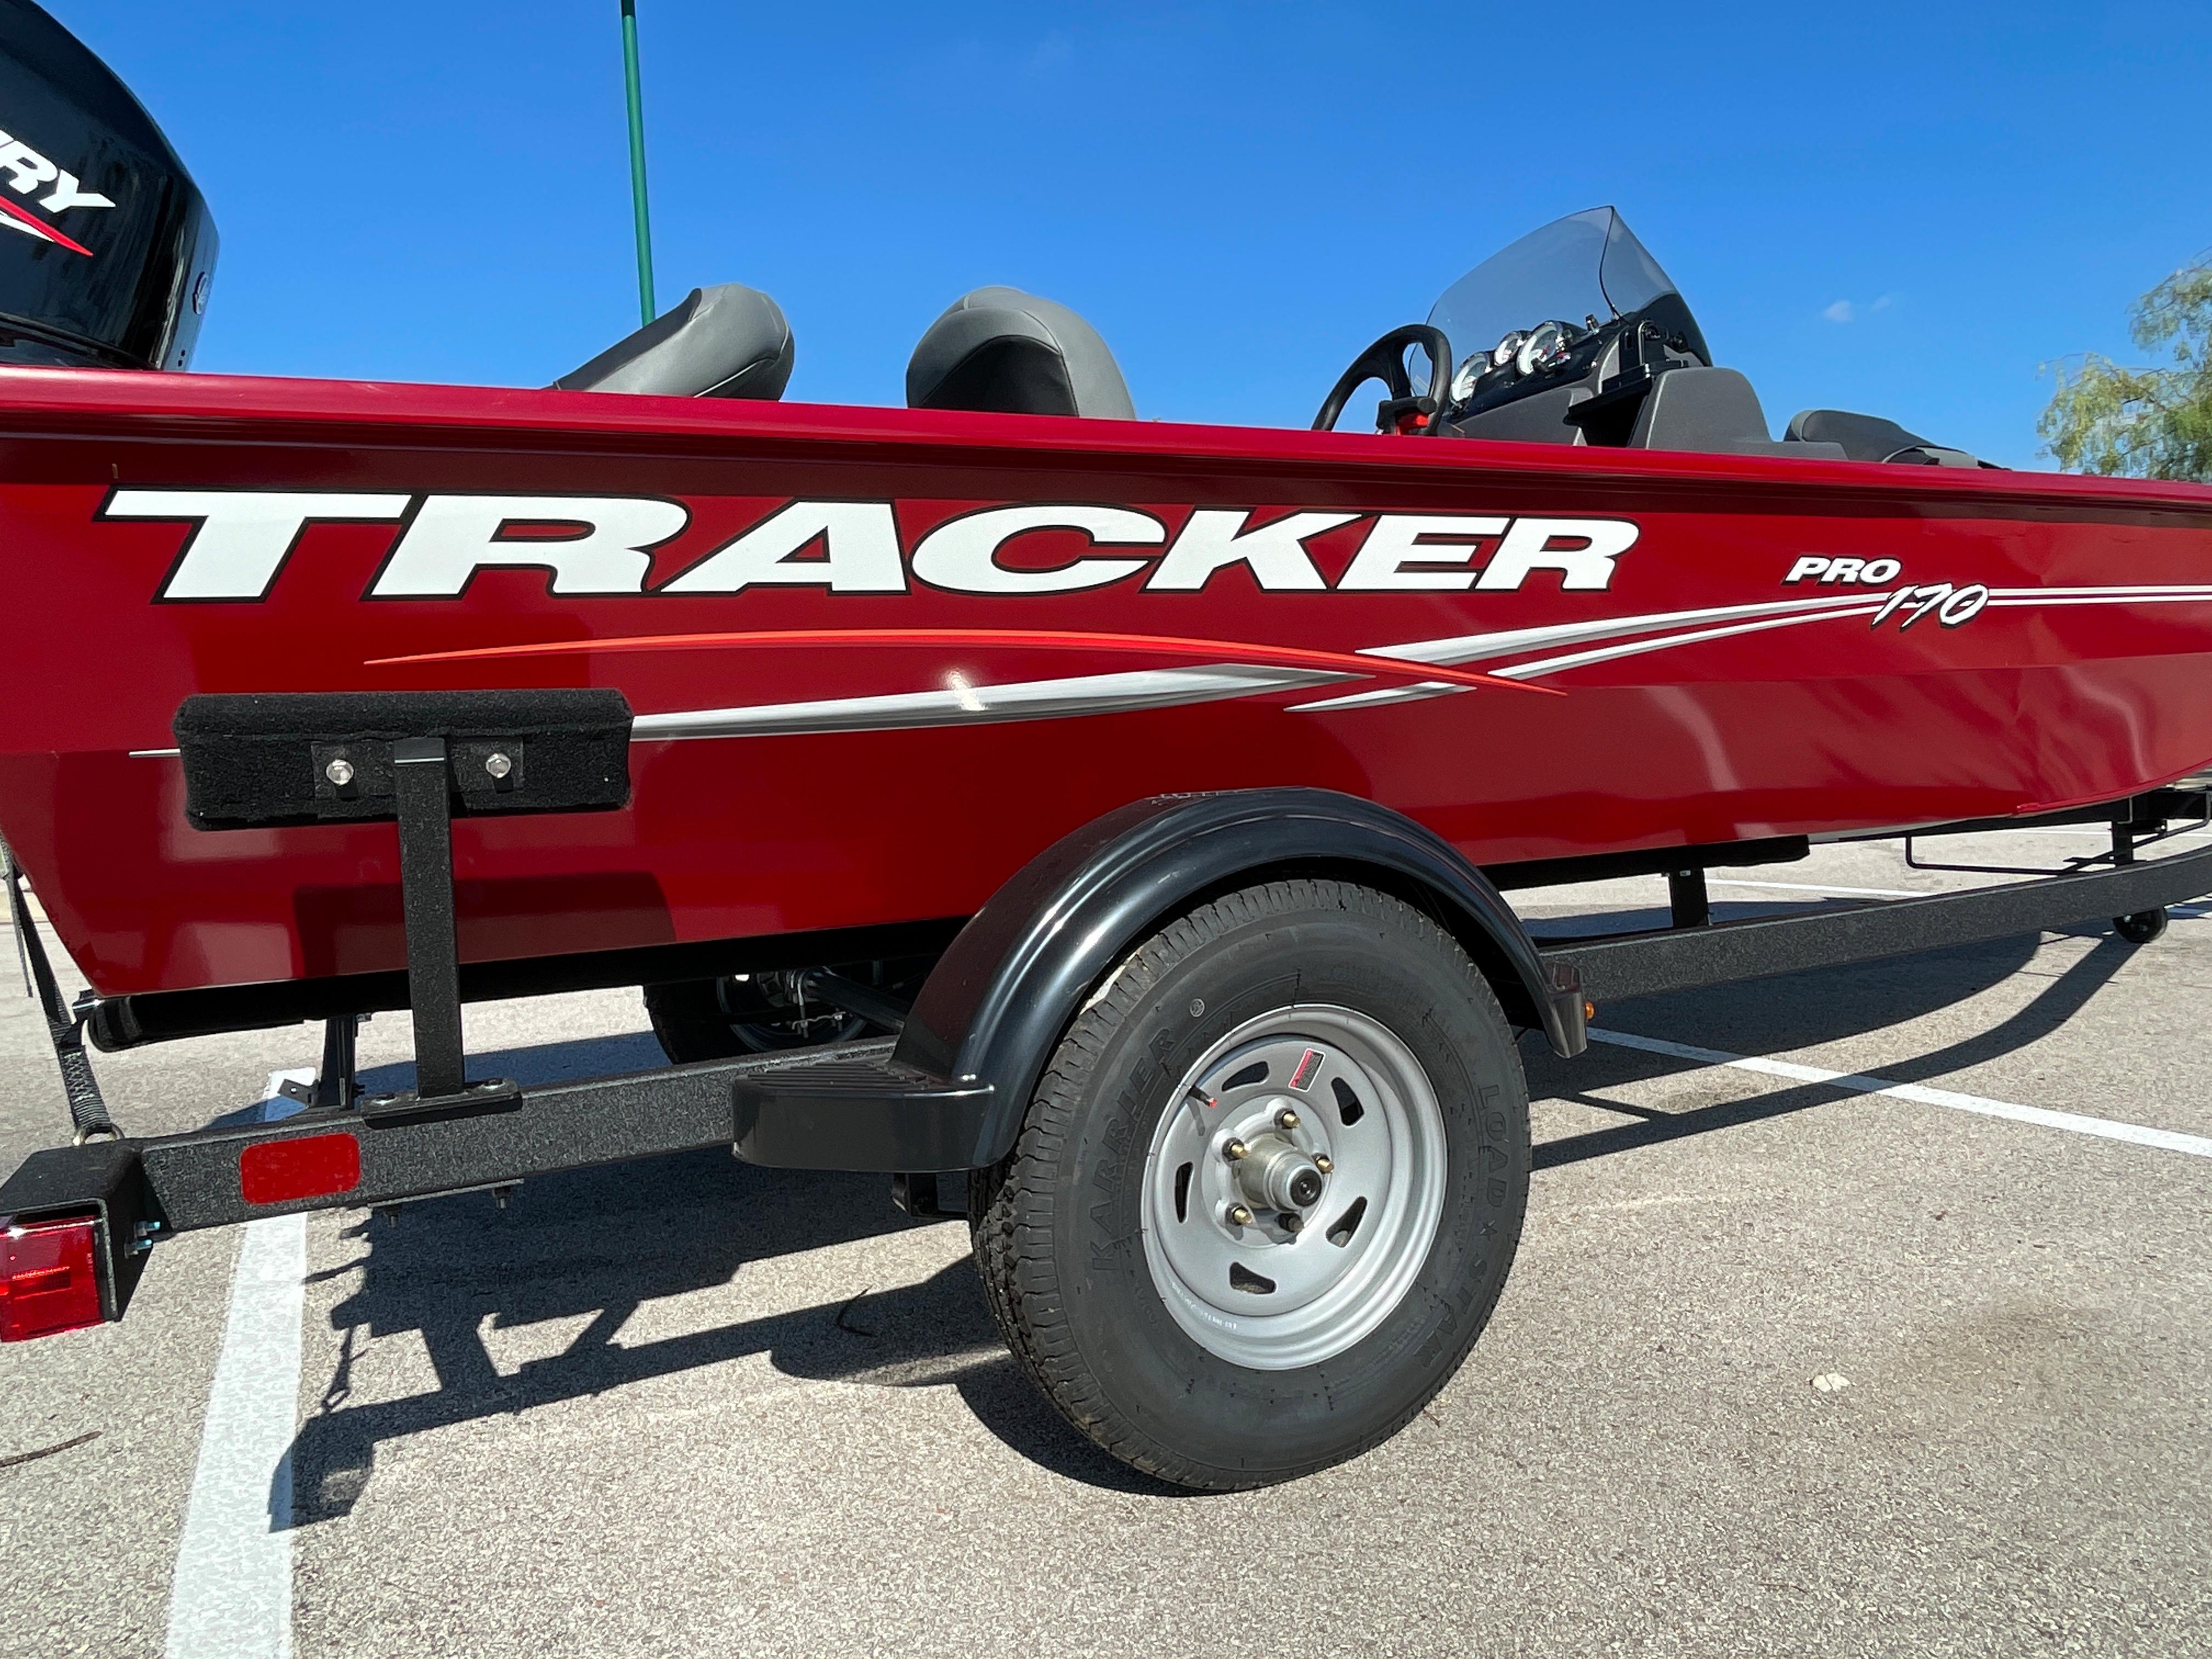 New 2024 Tracker Pro 170, 78665 Round Rock Boat Trader